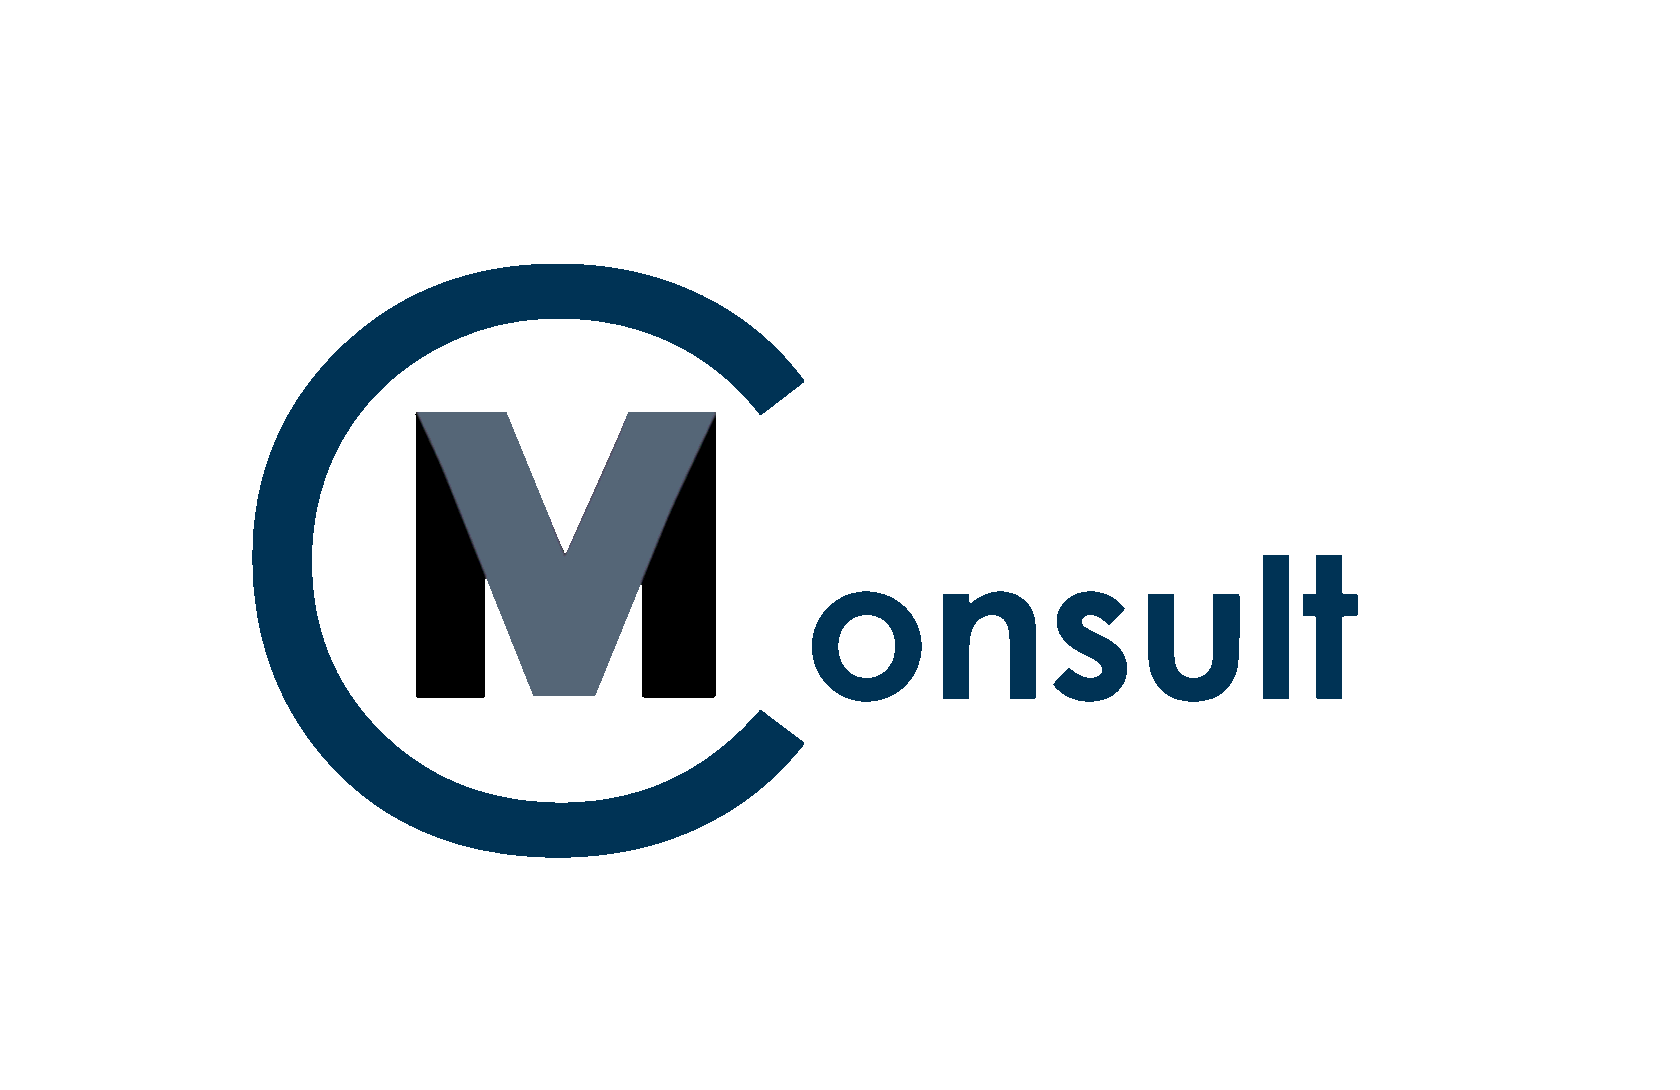 MV-Consult